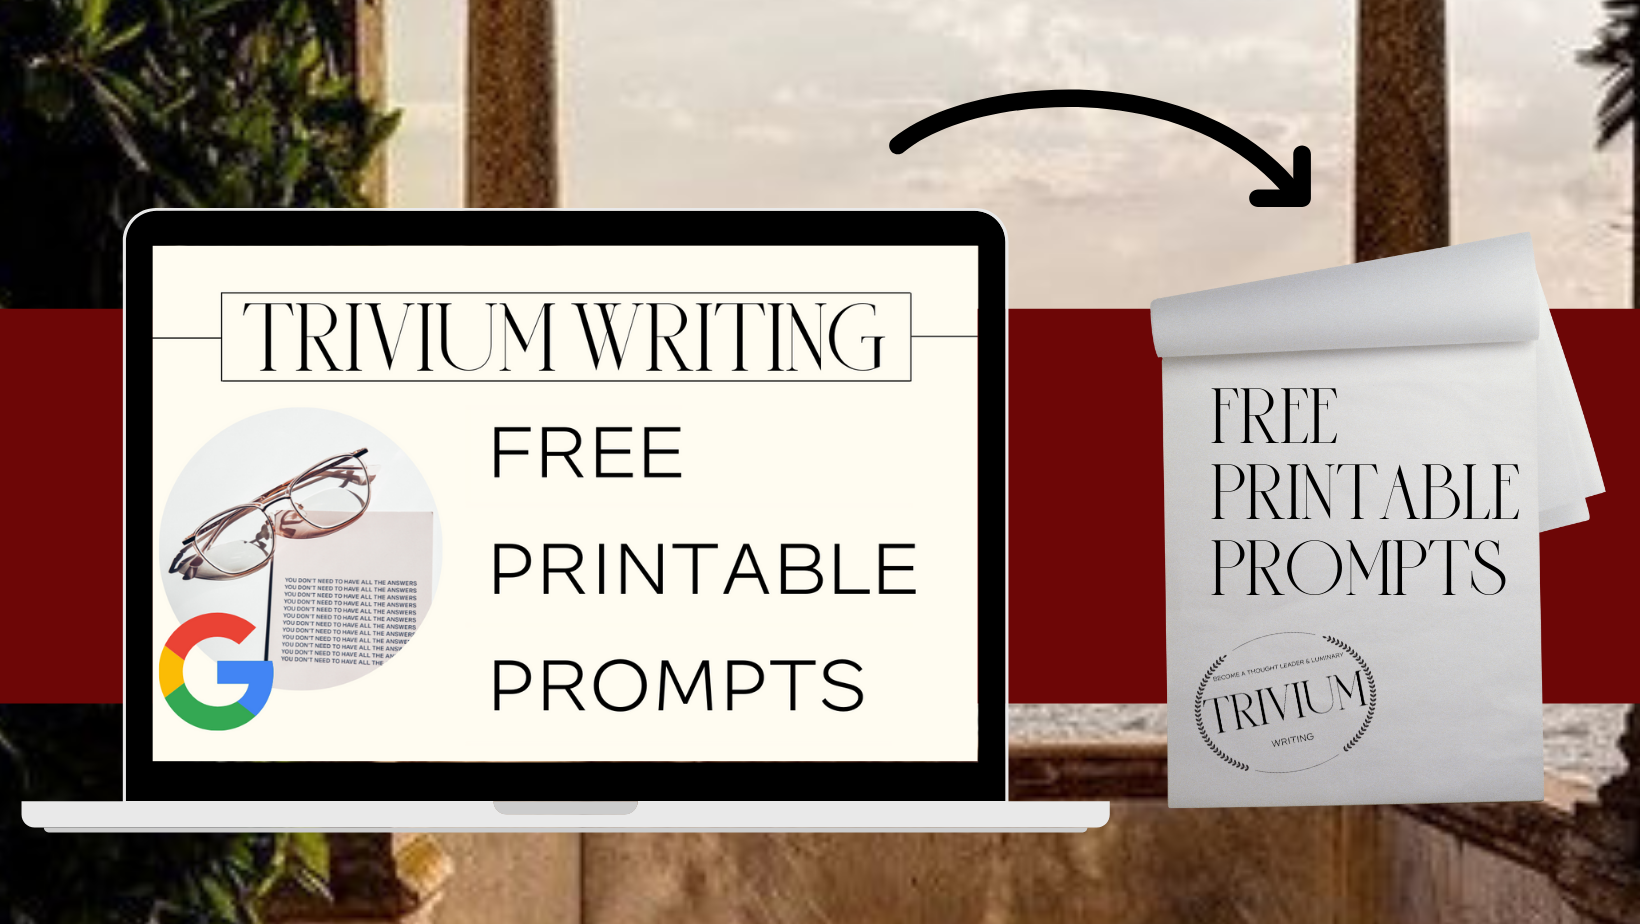 Free printable promtps